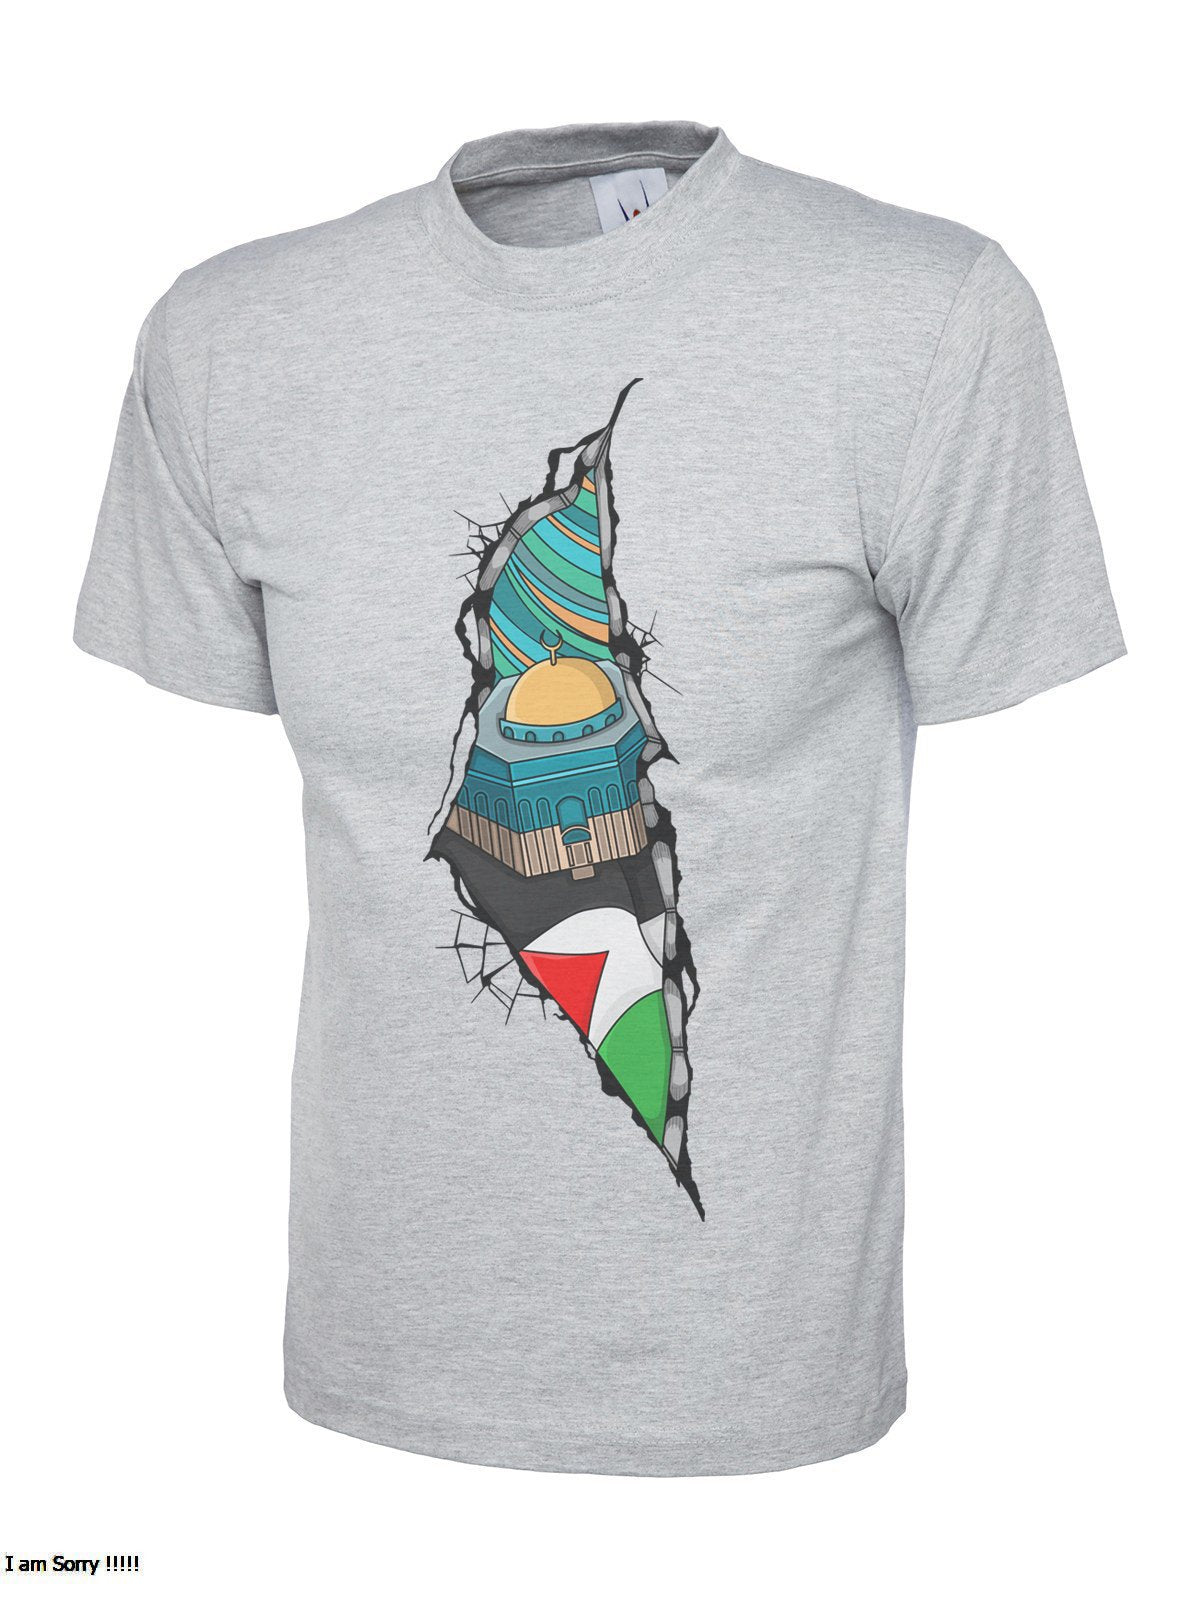 Palestine Tee - Wow T-Shirts